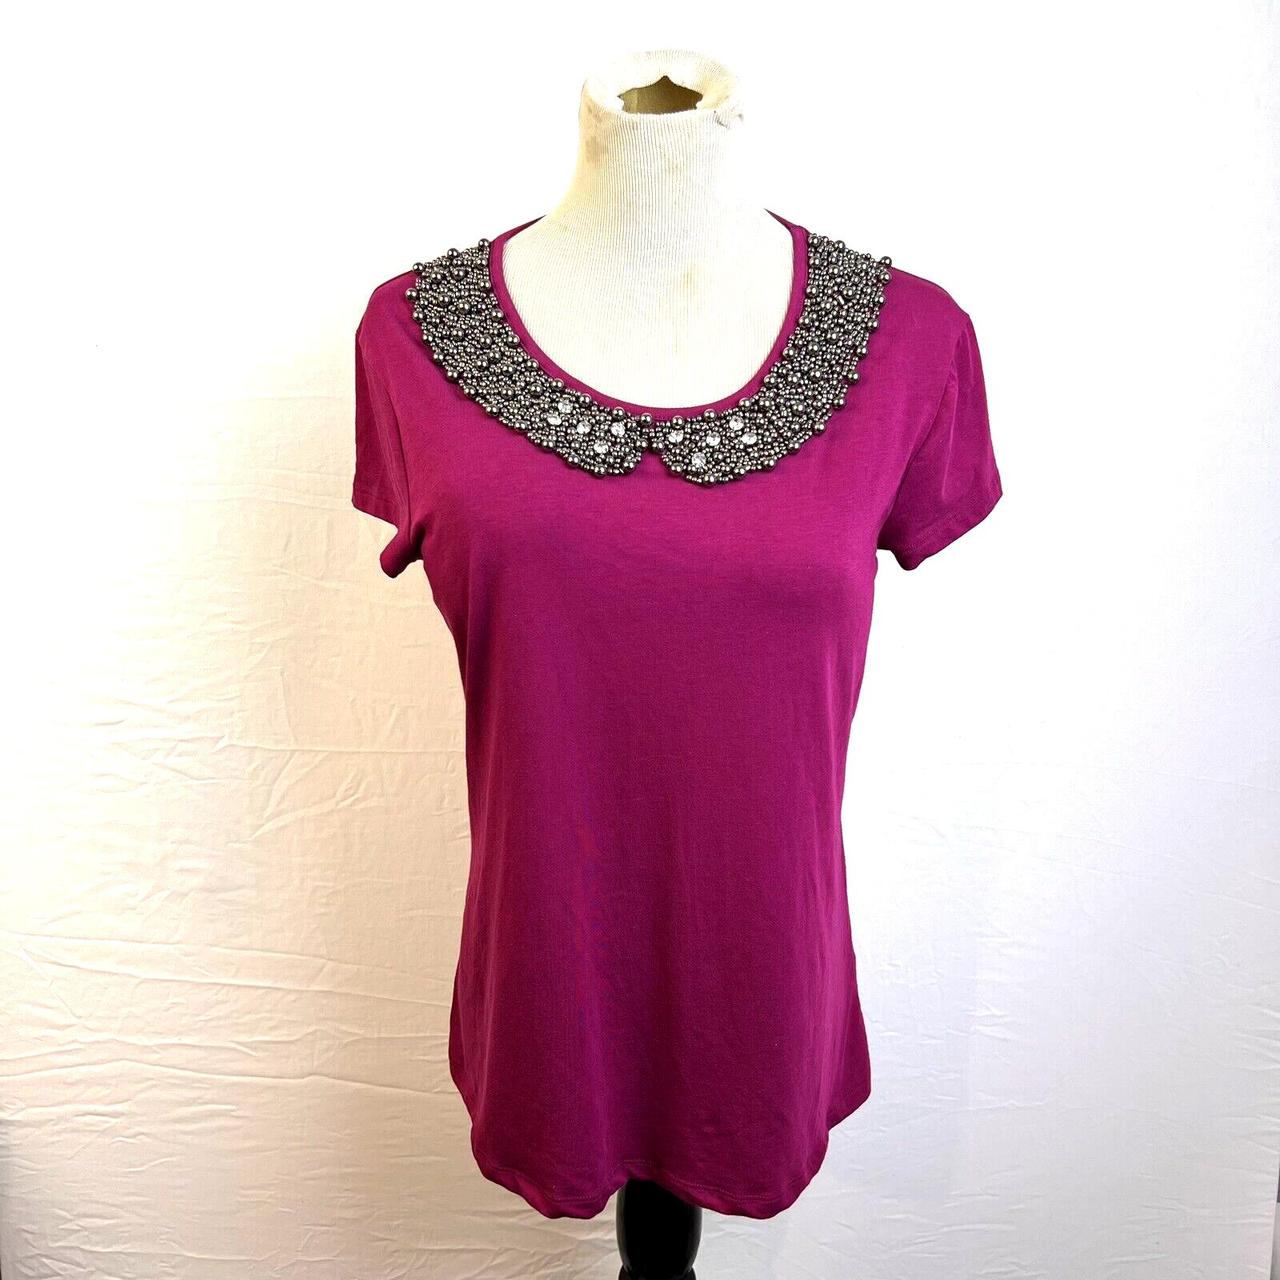 Embellished Blended Collar Neck Women's Casual Shirt